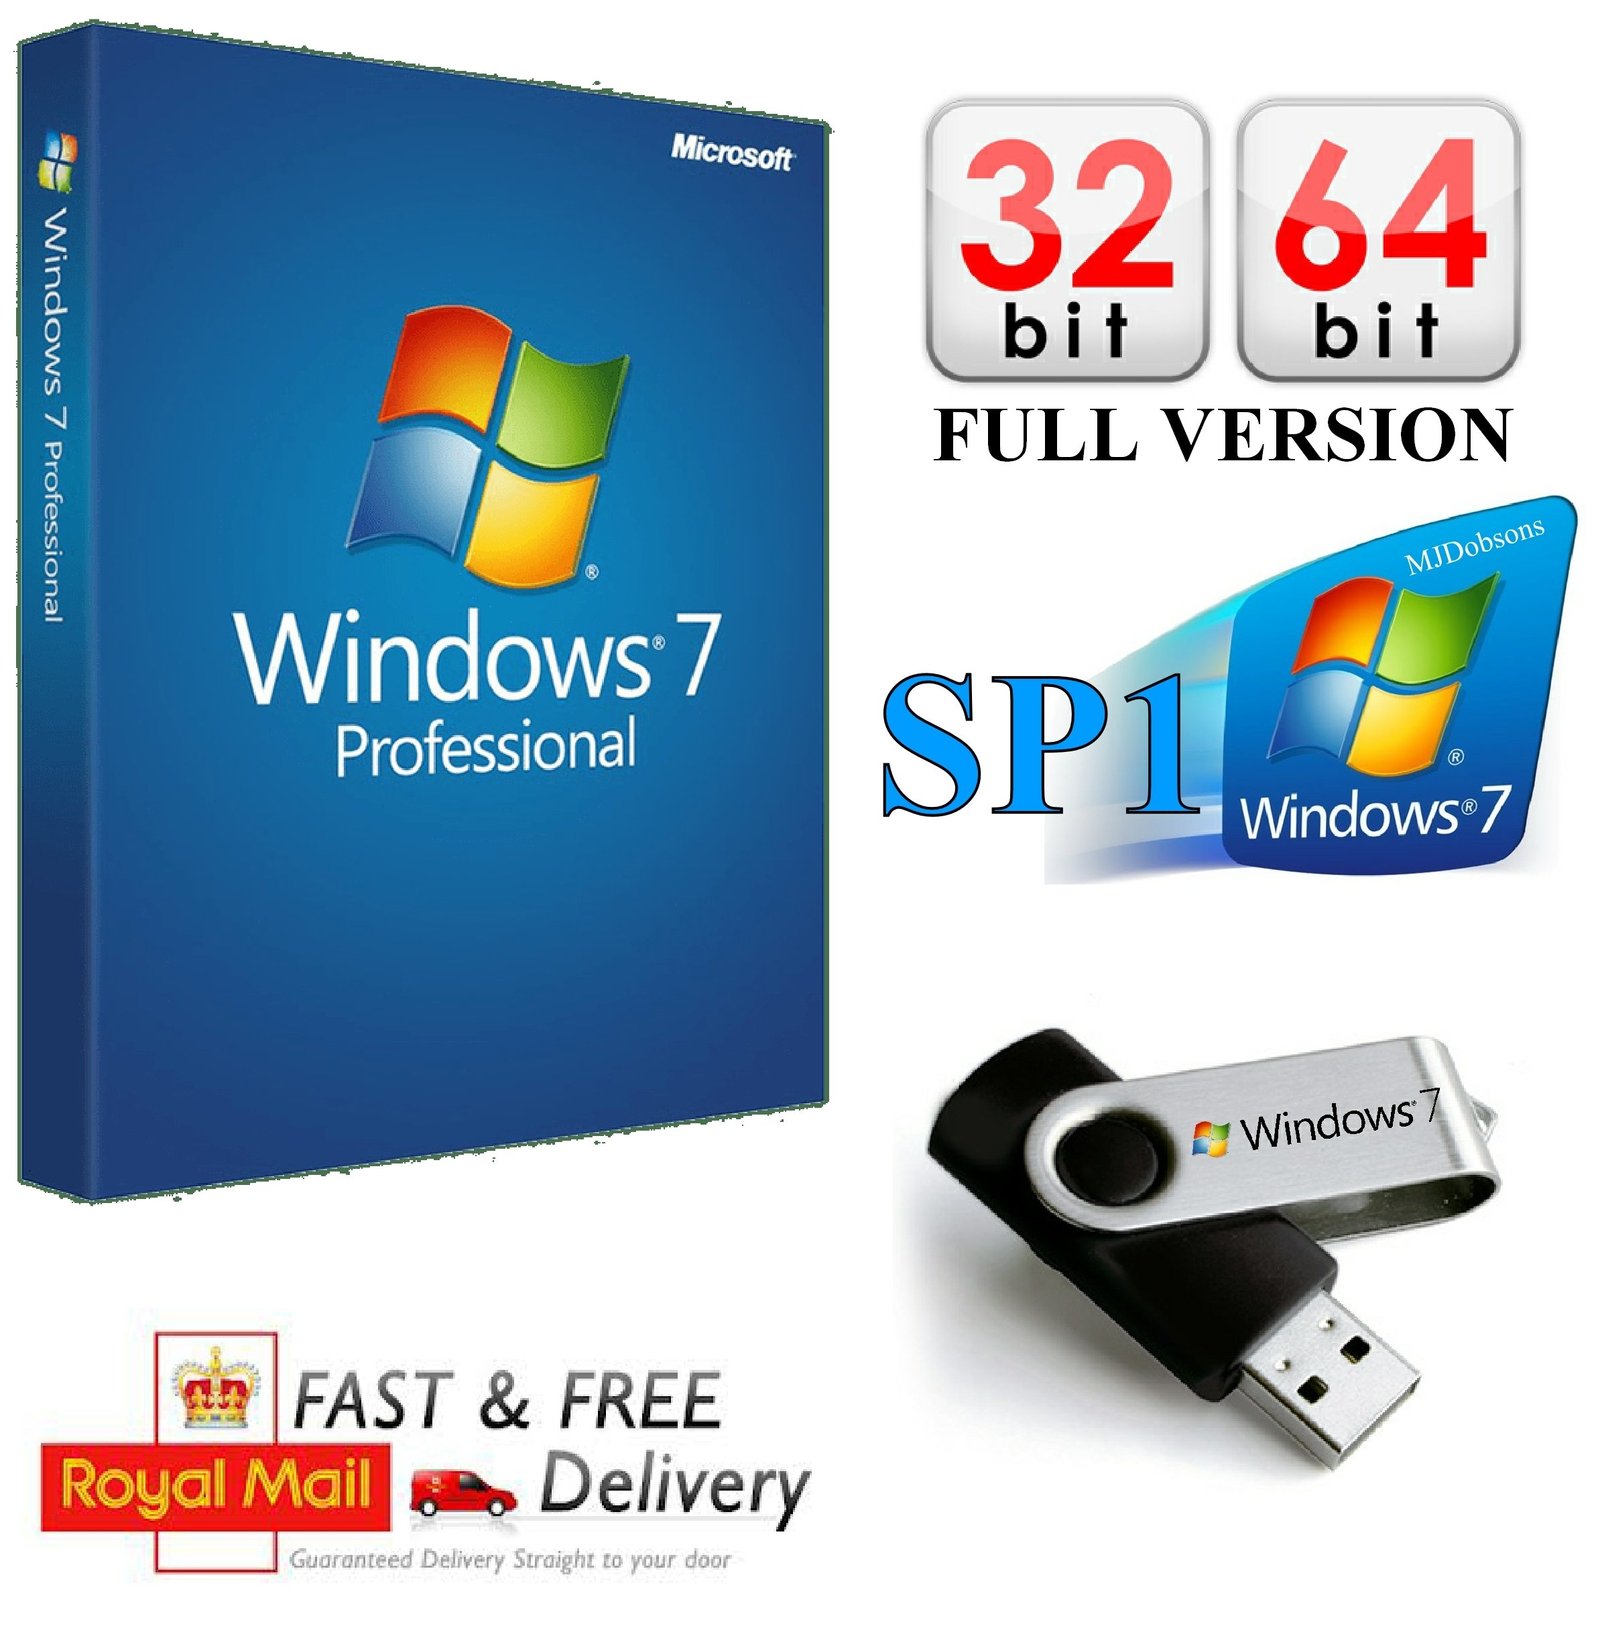 windows 7 professional 32 bit